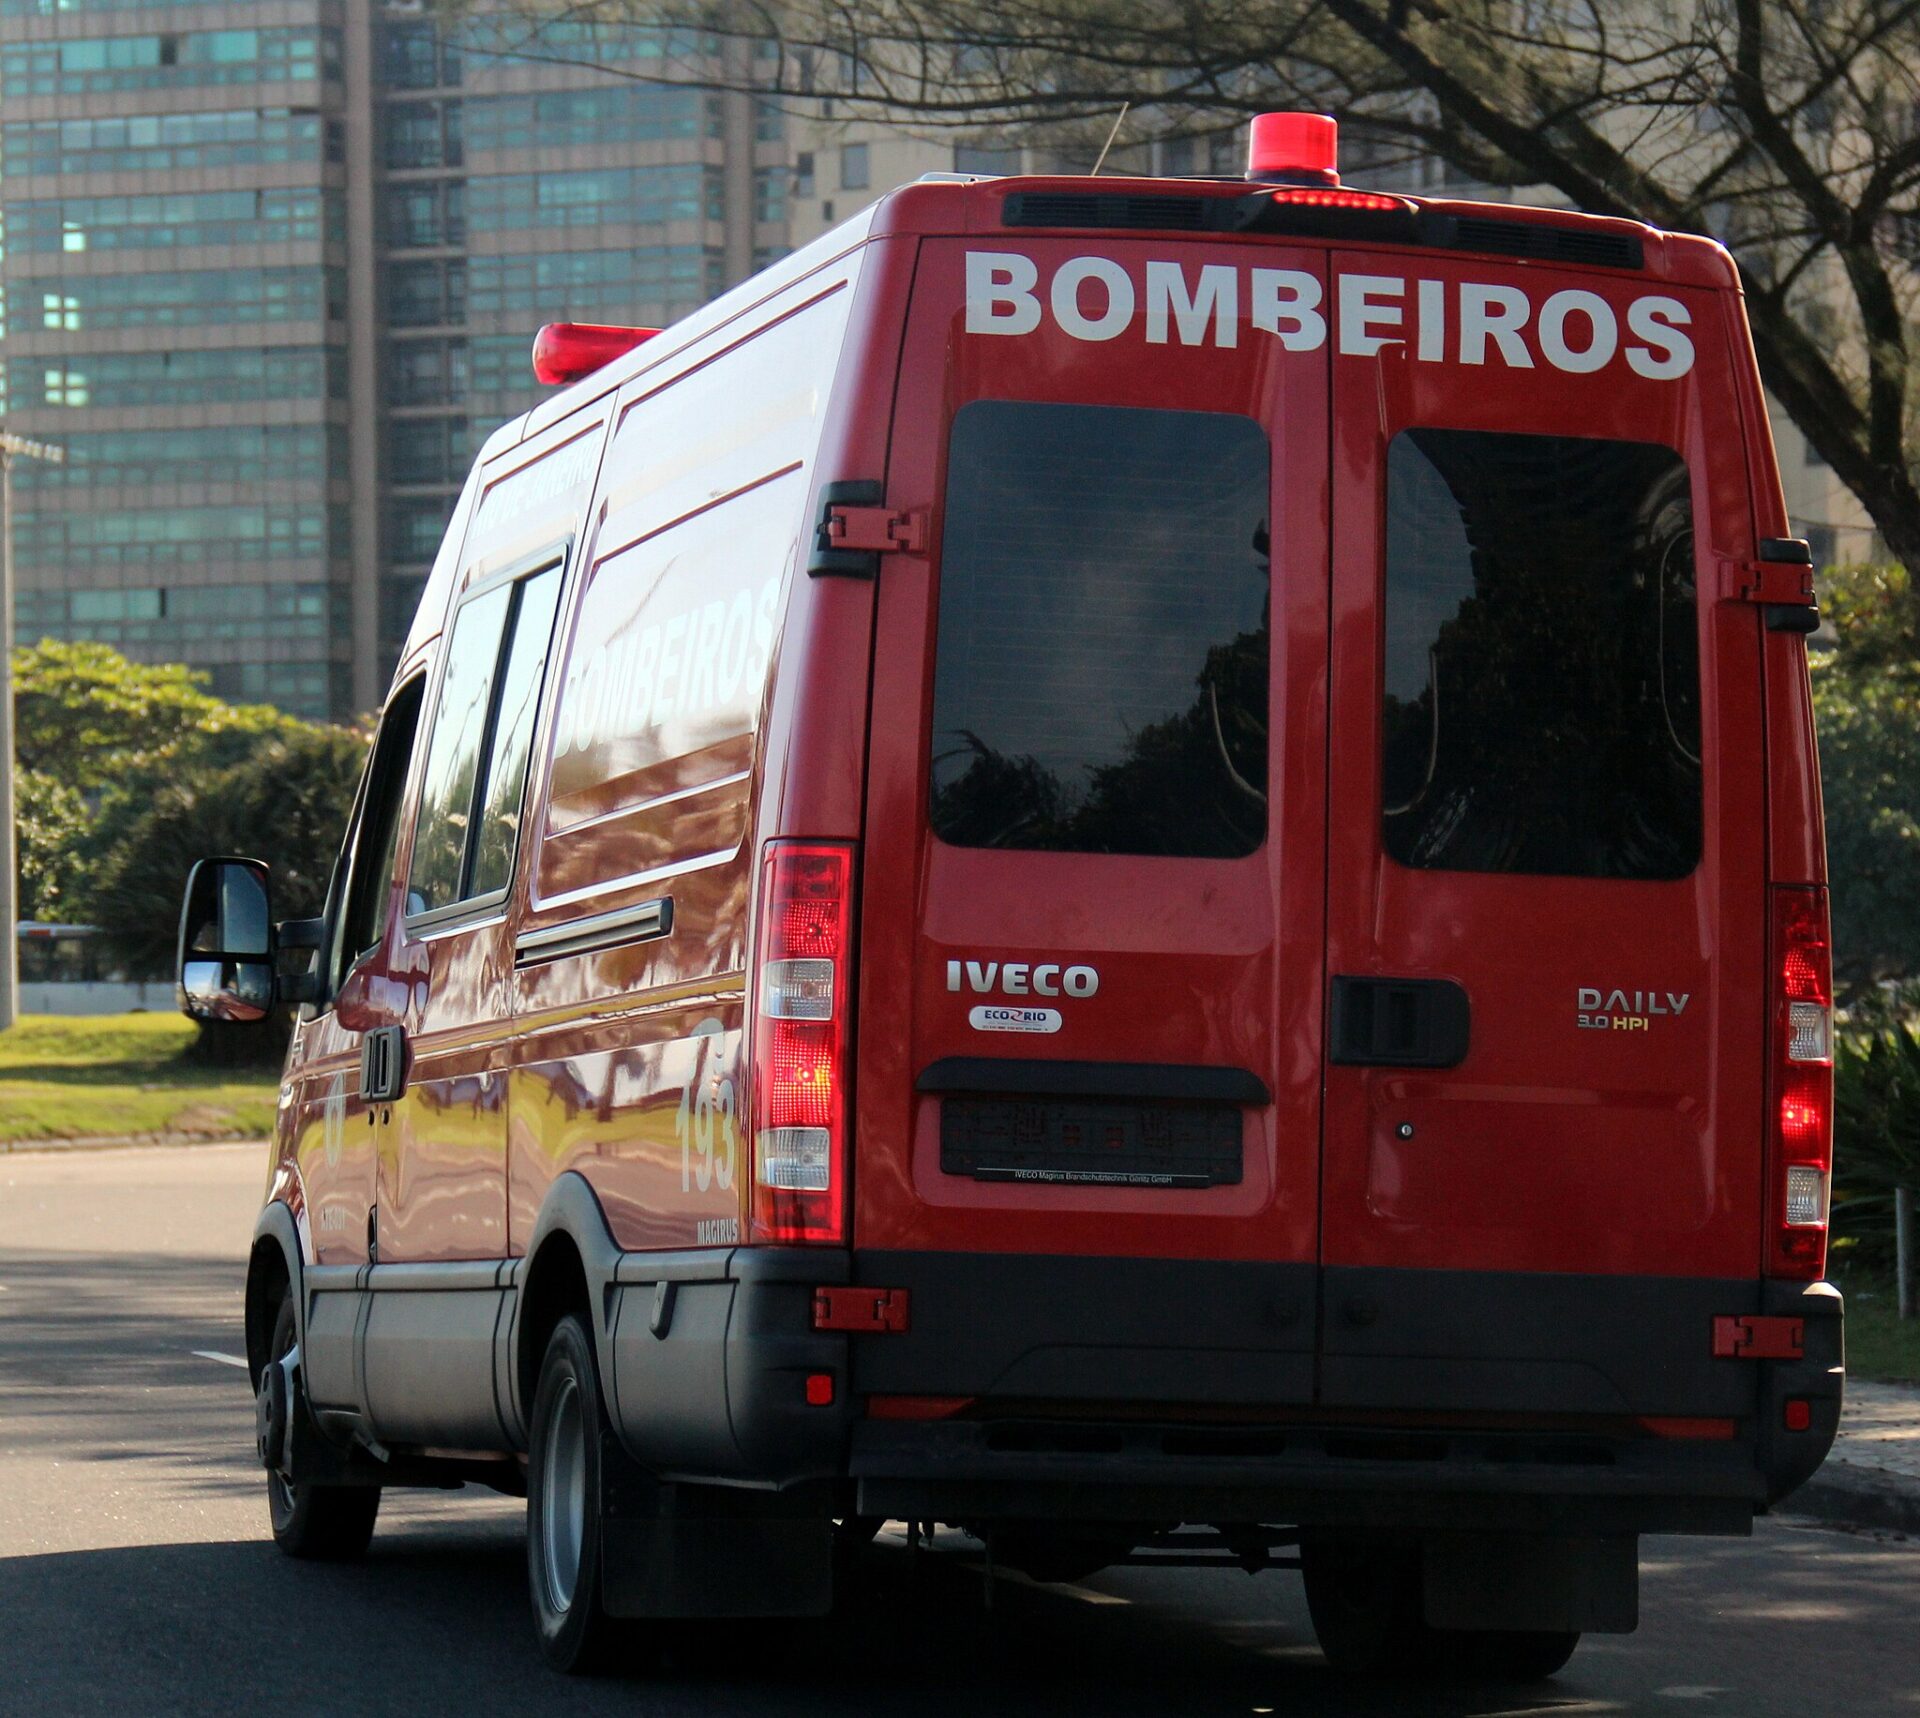 Descubra como surgiram os bombeiros militares no Brasil!